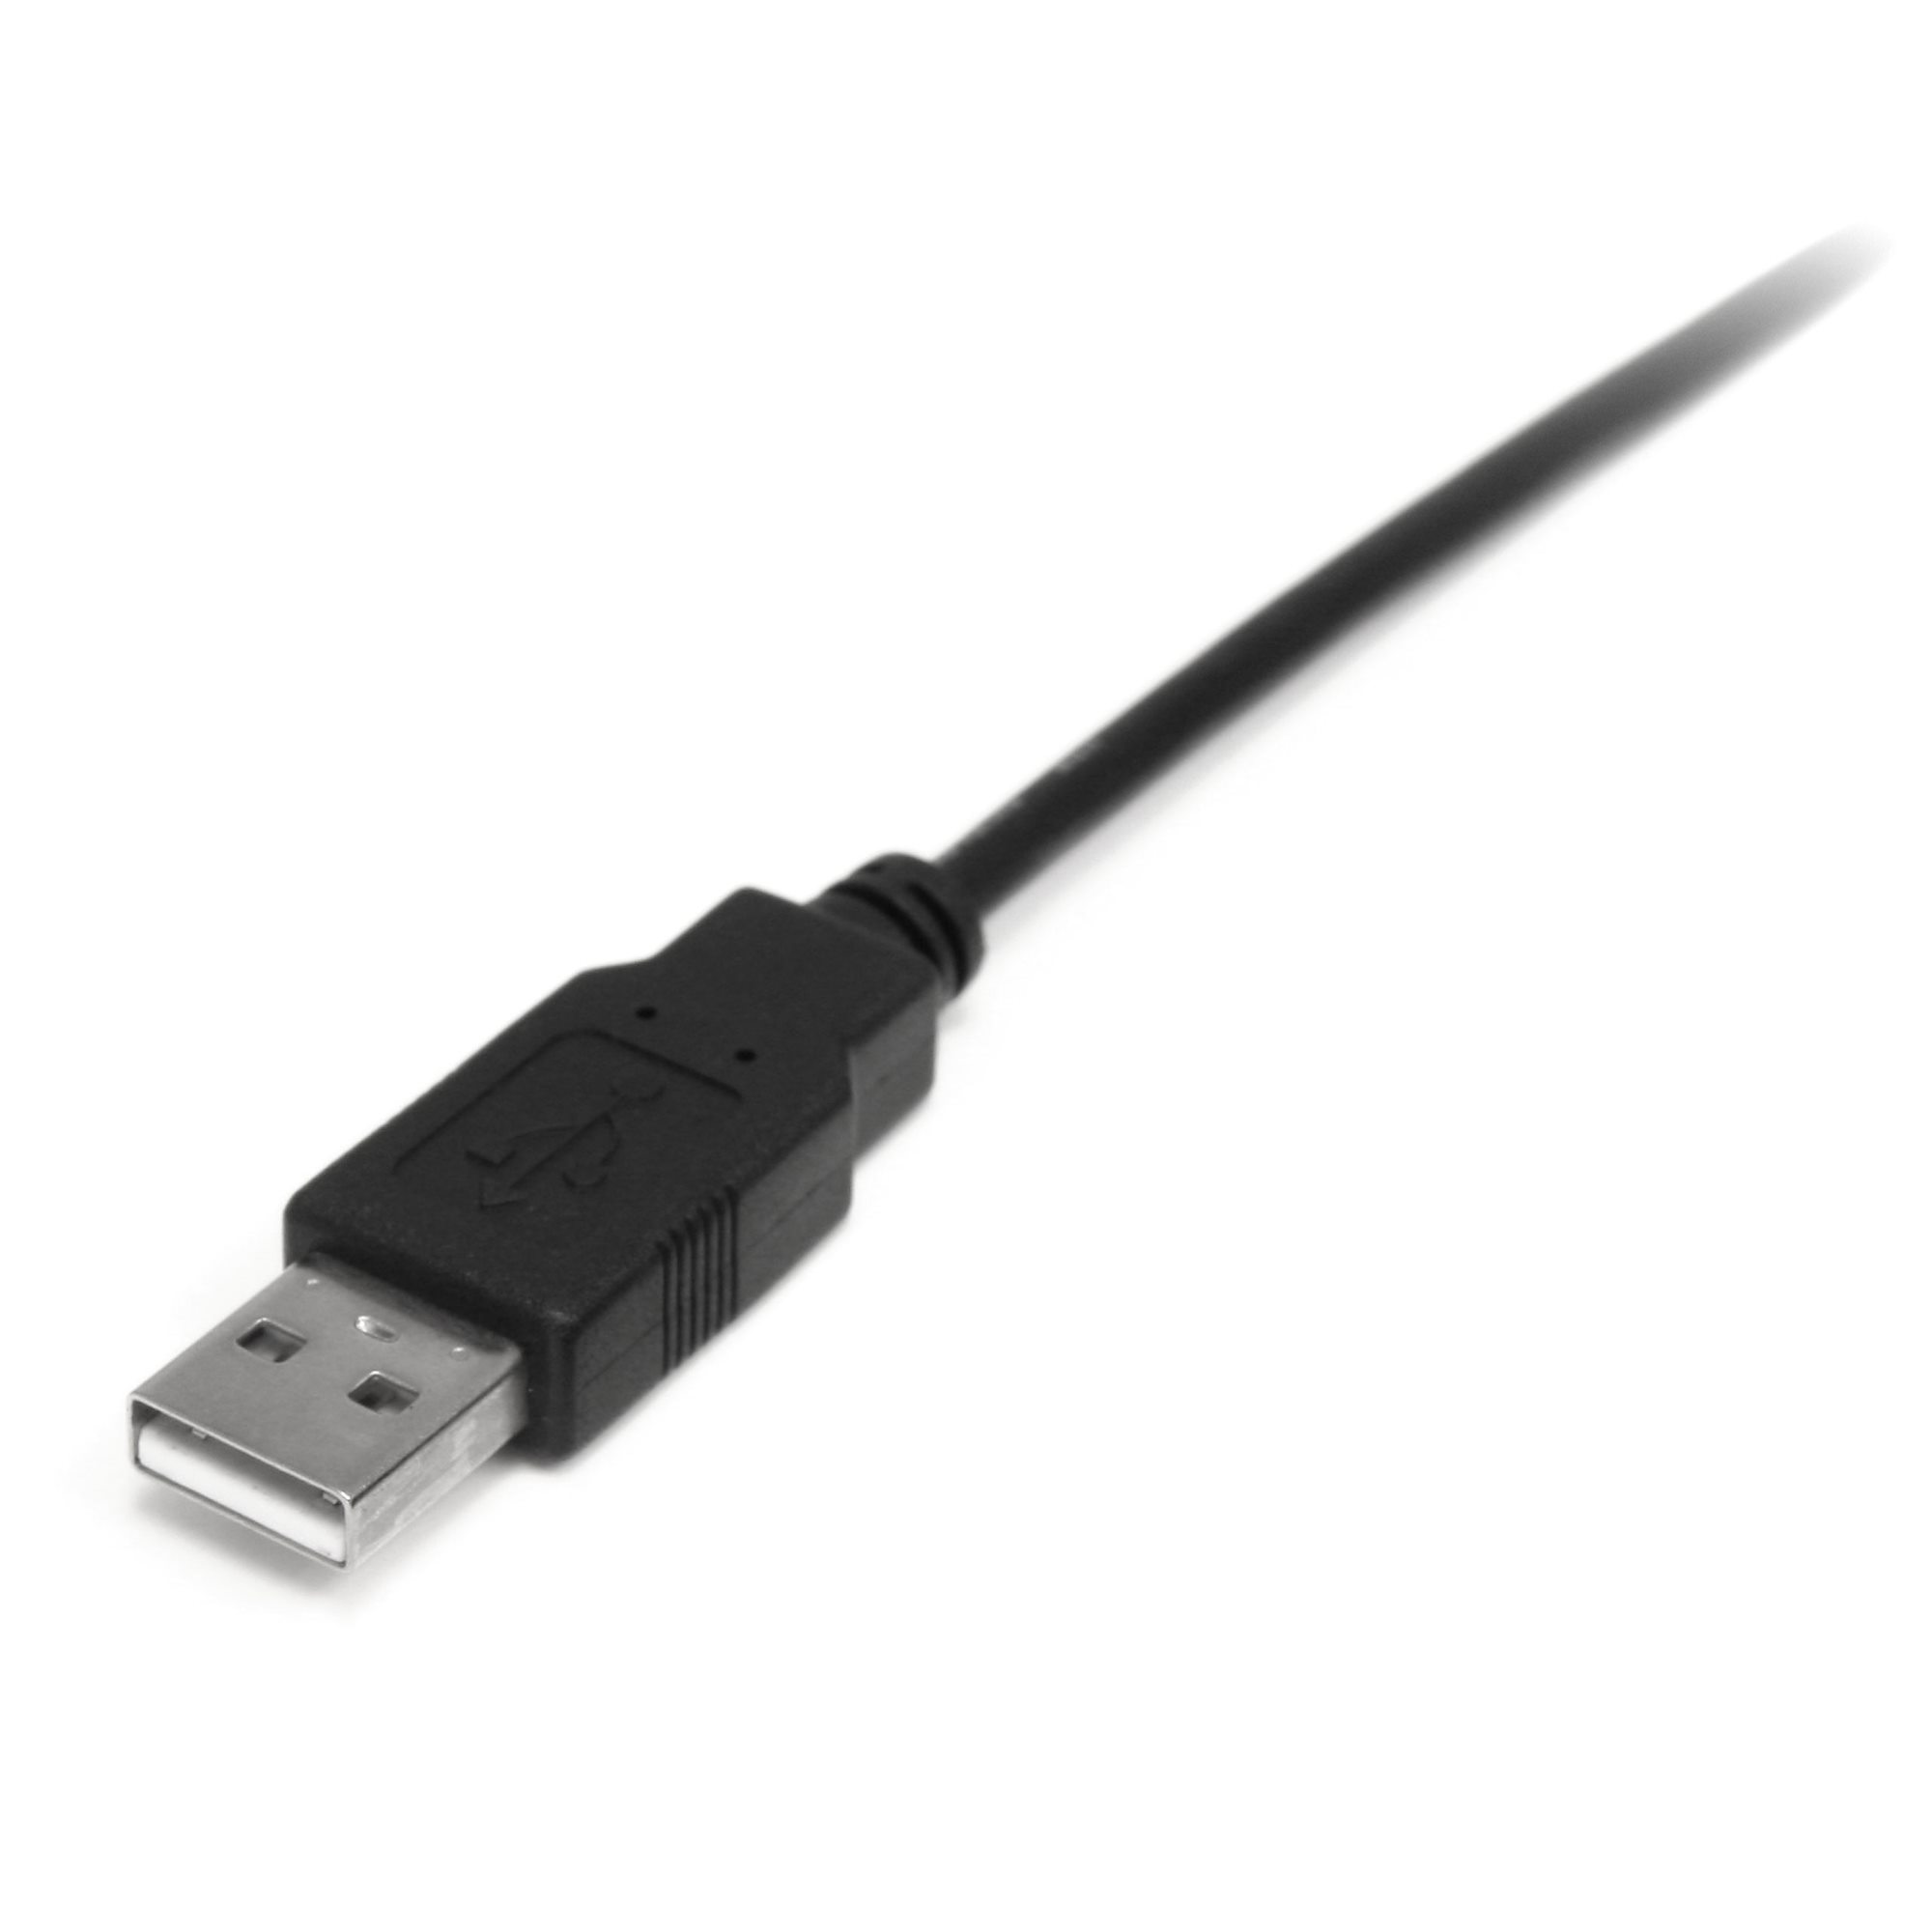 0.5m Mini USB 2.0 Cable - A Mini B - Mini USB Cables & Adapters | StarTech.com Europe